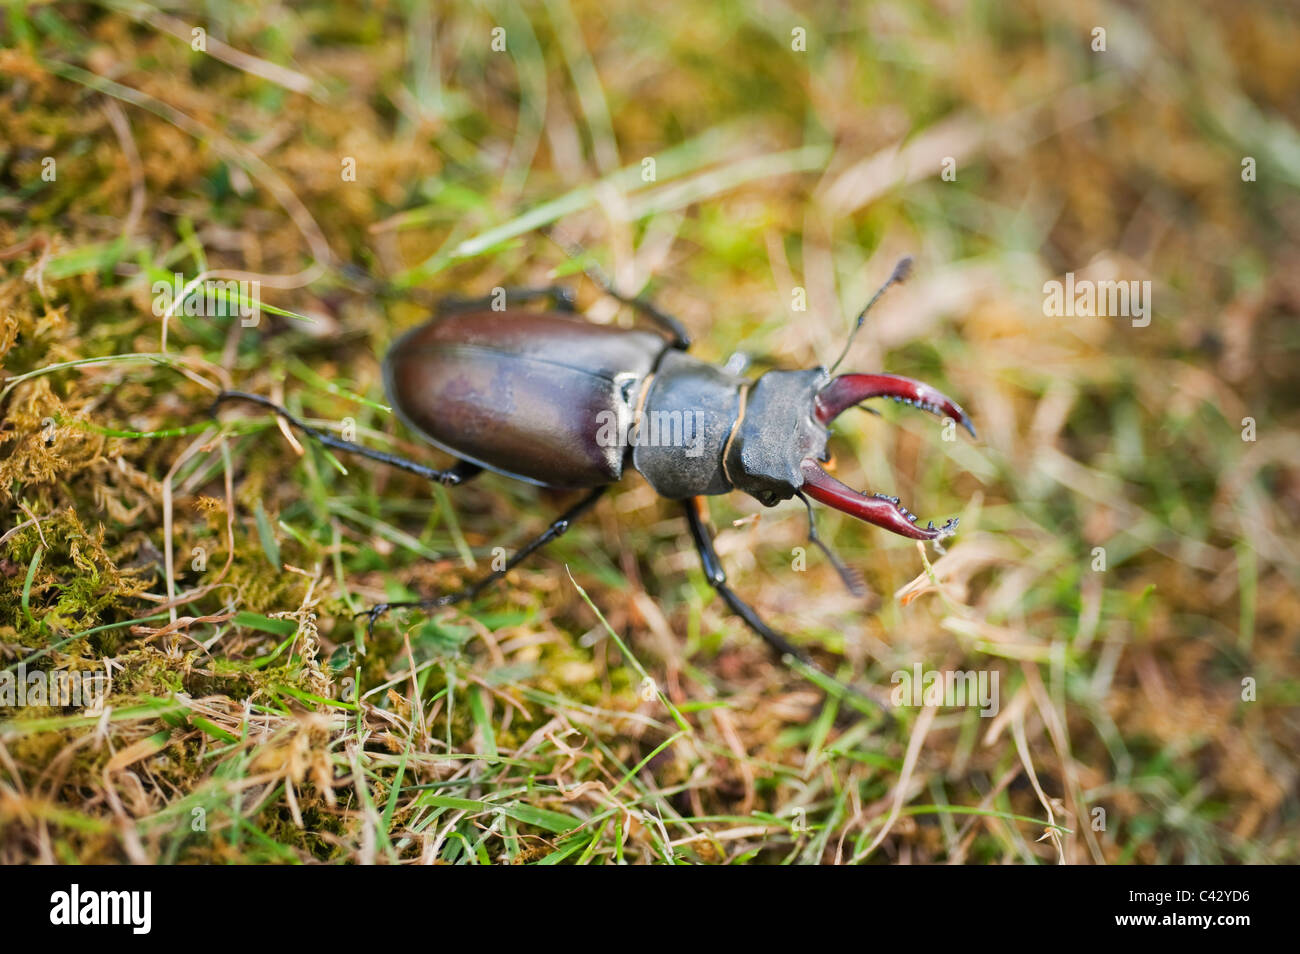 Male Stag Beetle, Lucanus cervus, in a London garden. Britains largest beetle. Stock Photo